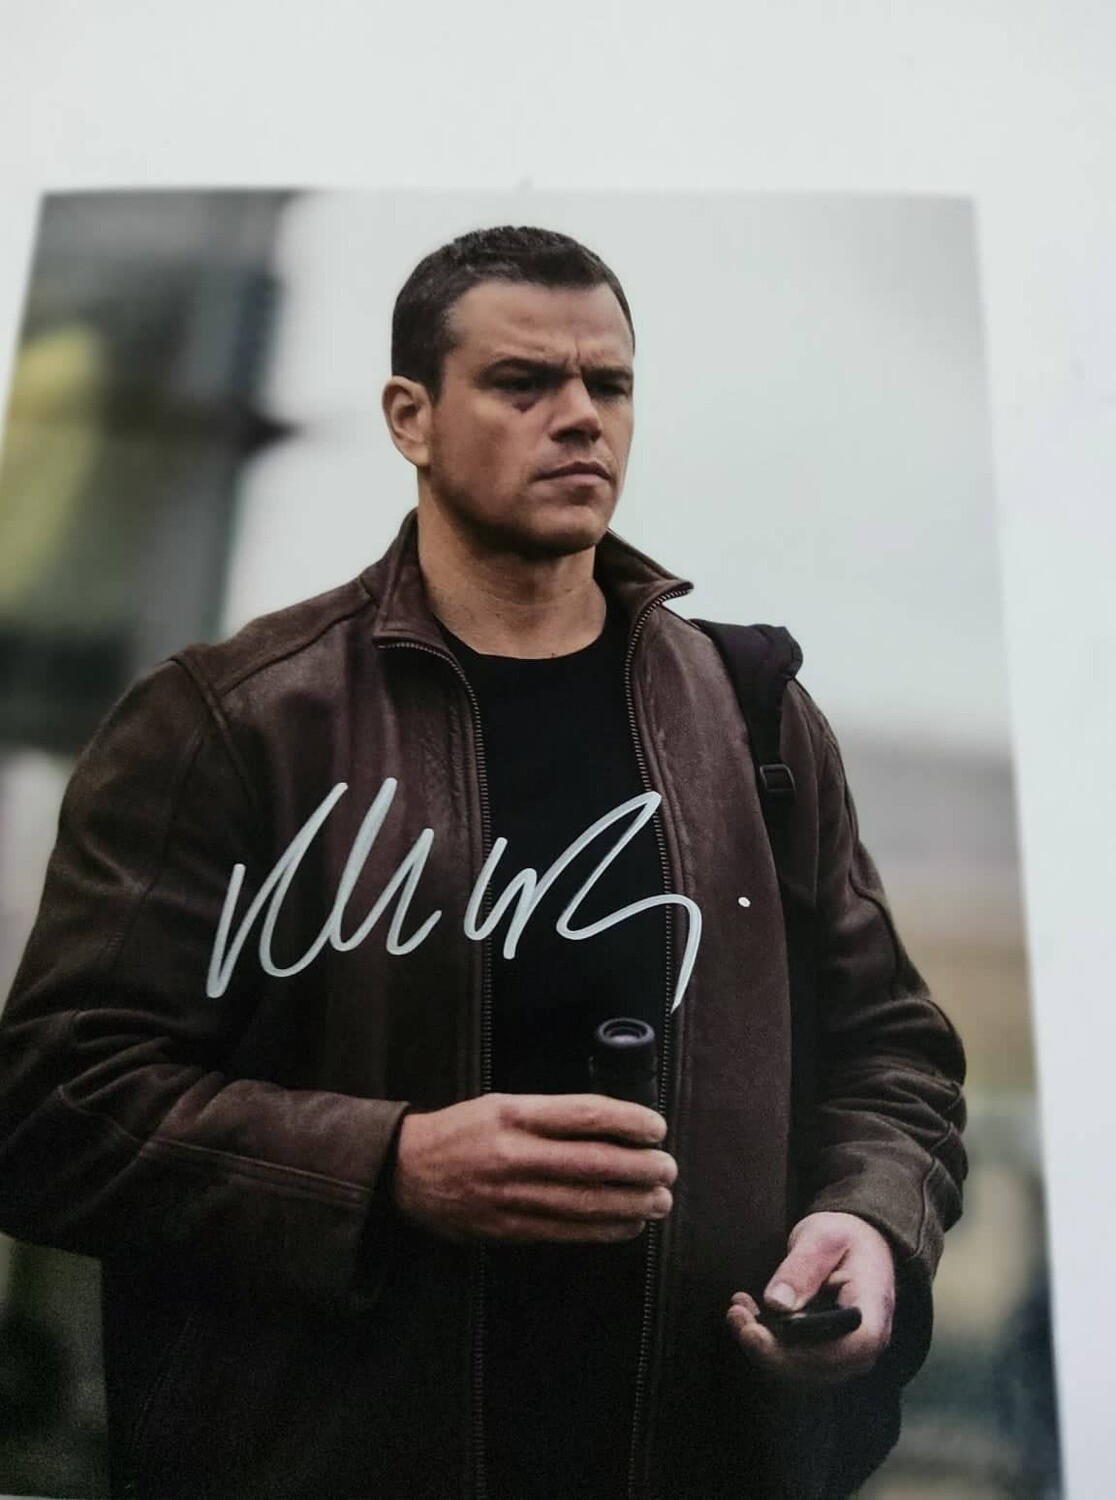 FOTO Matt Damon Jason Bourne Leather Jacket Signed + COA Photo Matt Damon Jason Bourne Leather Jacket Autografato Signed